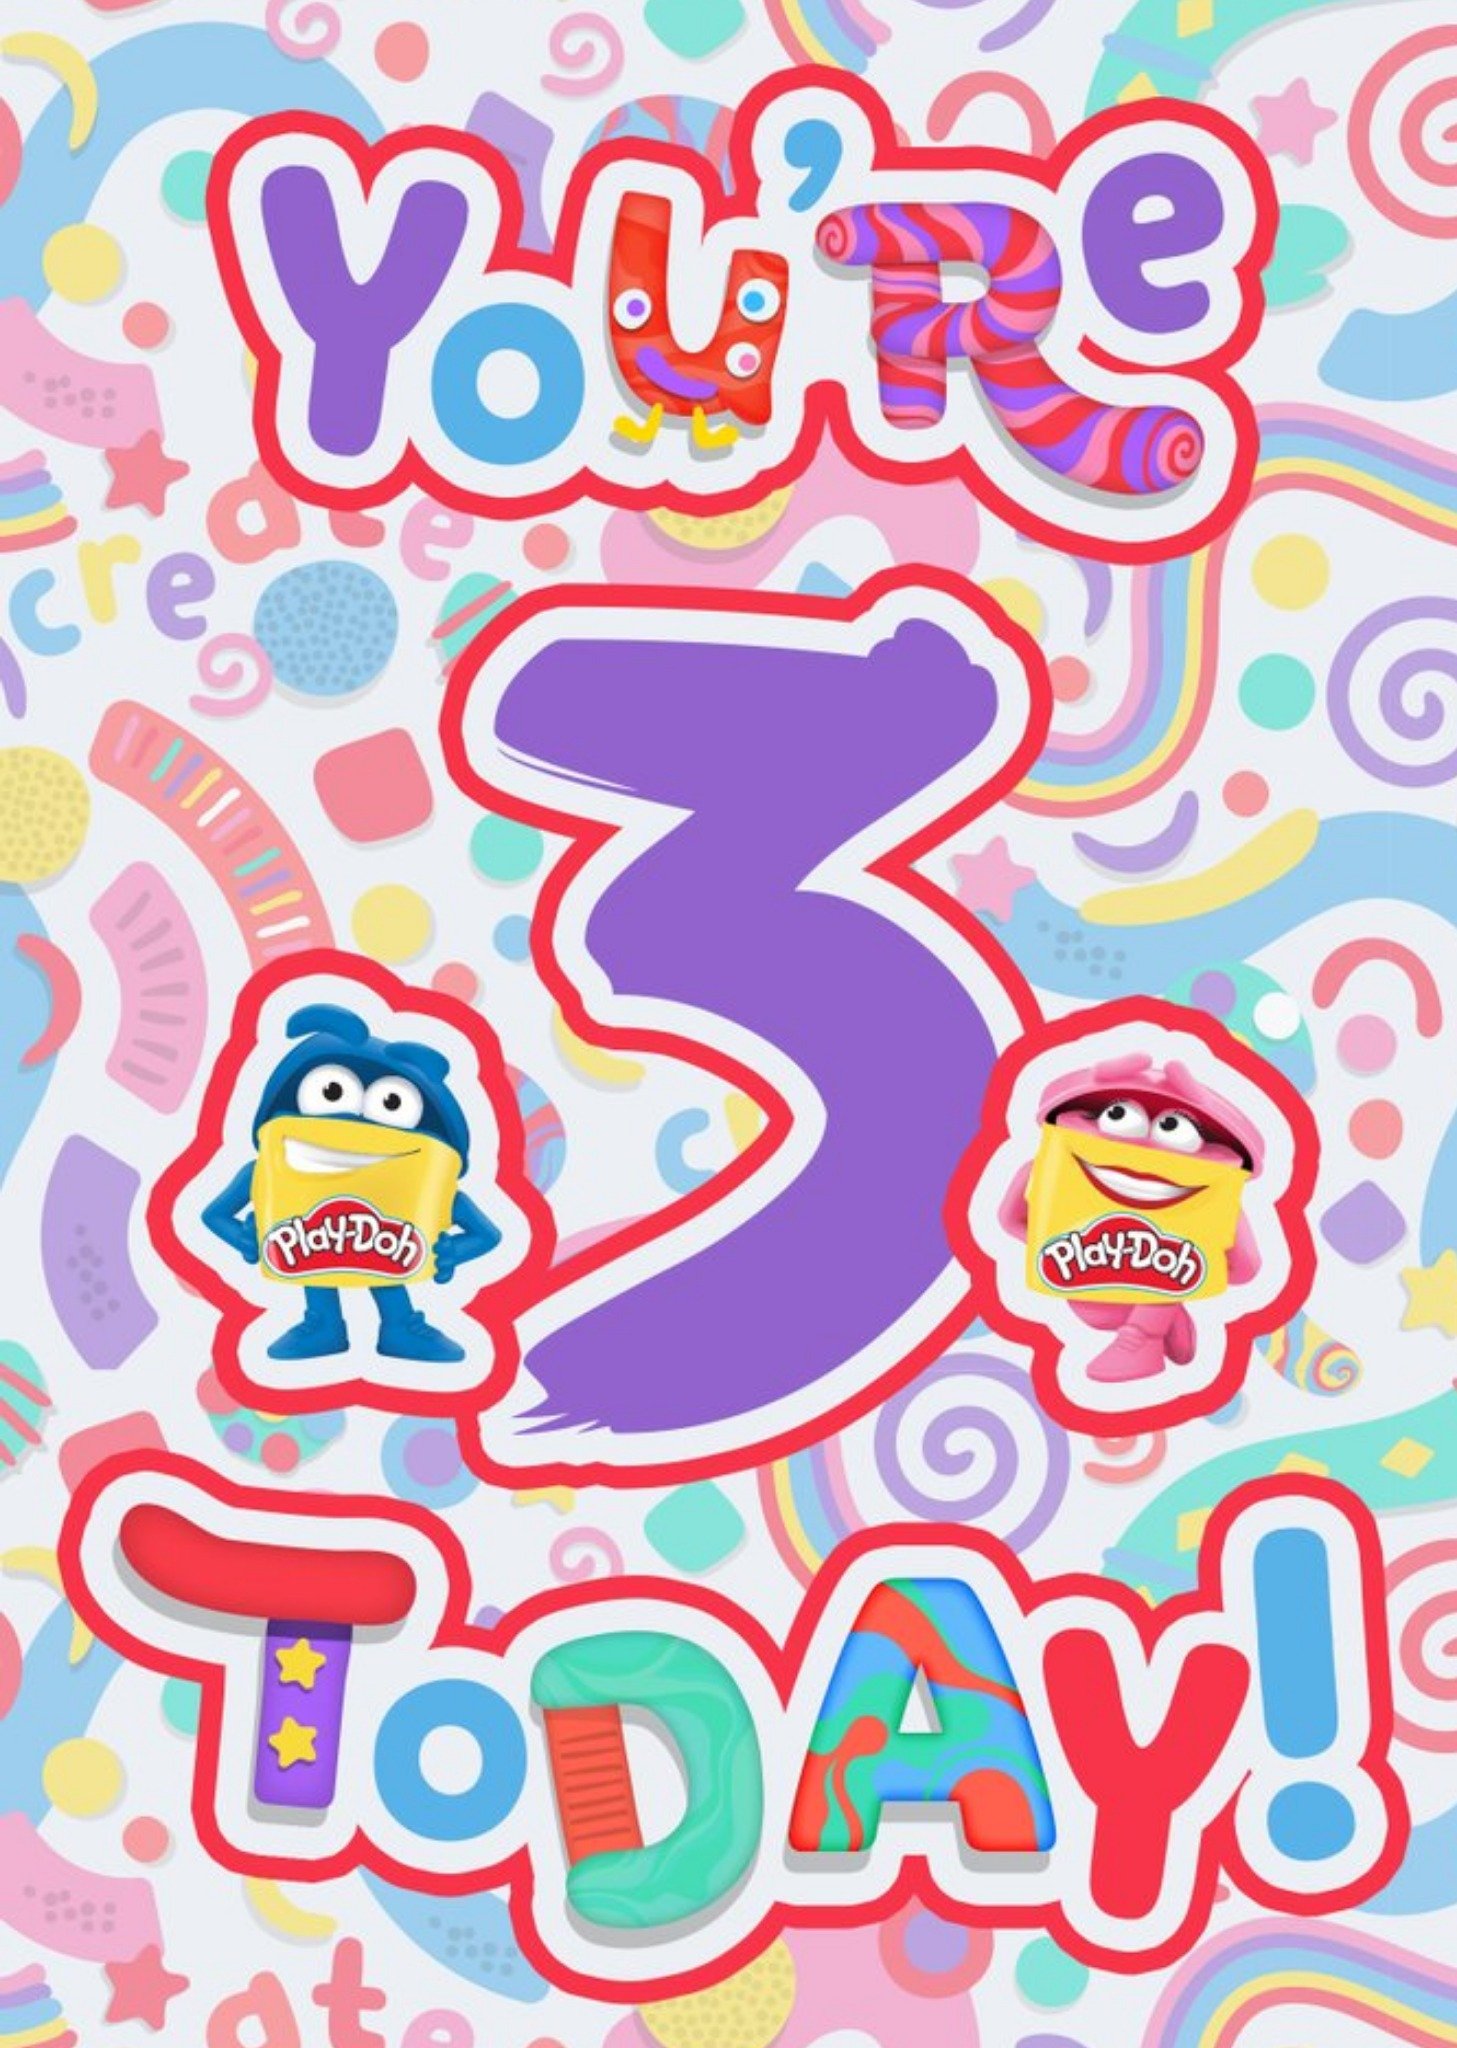 Moonpig Play Doh Bright Fun 3 Today Birthday Card By Hasbro, Large